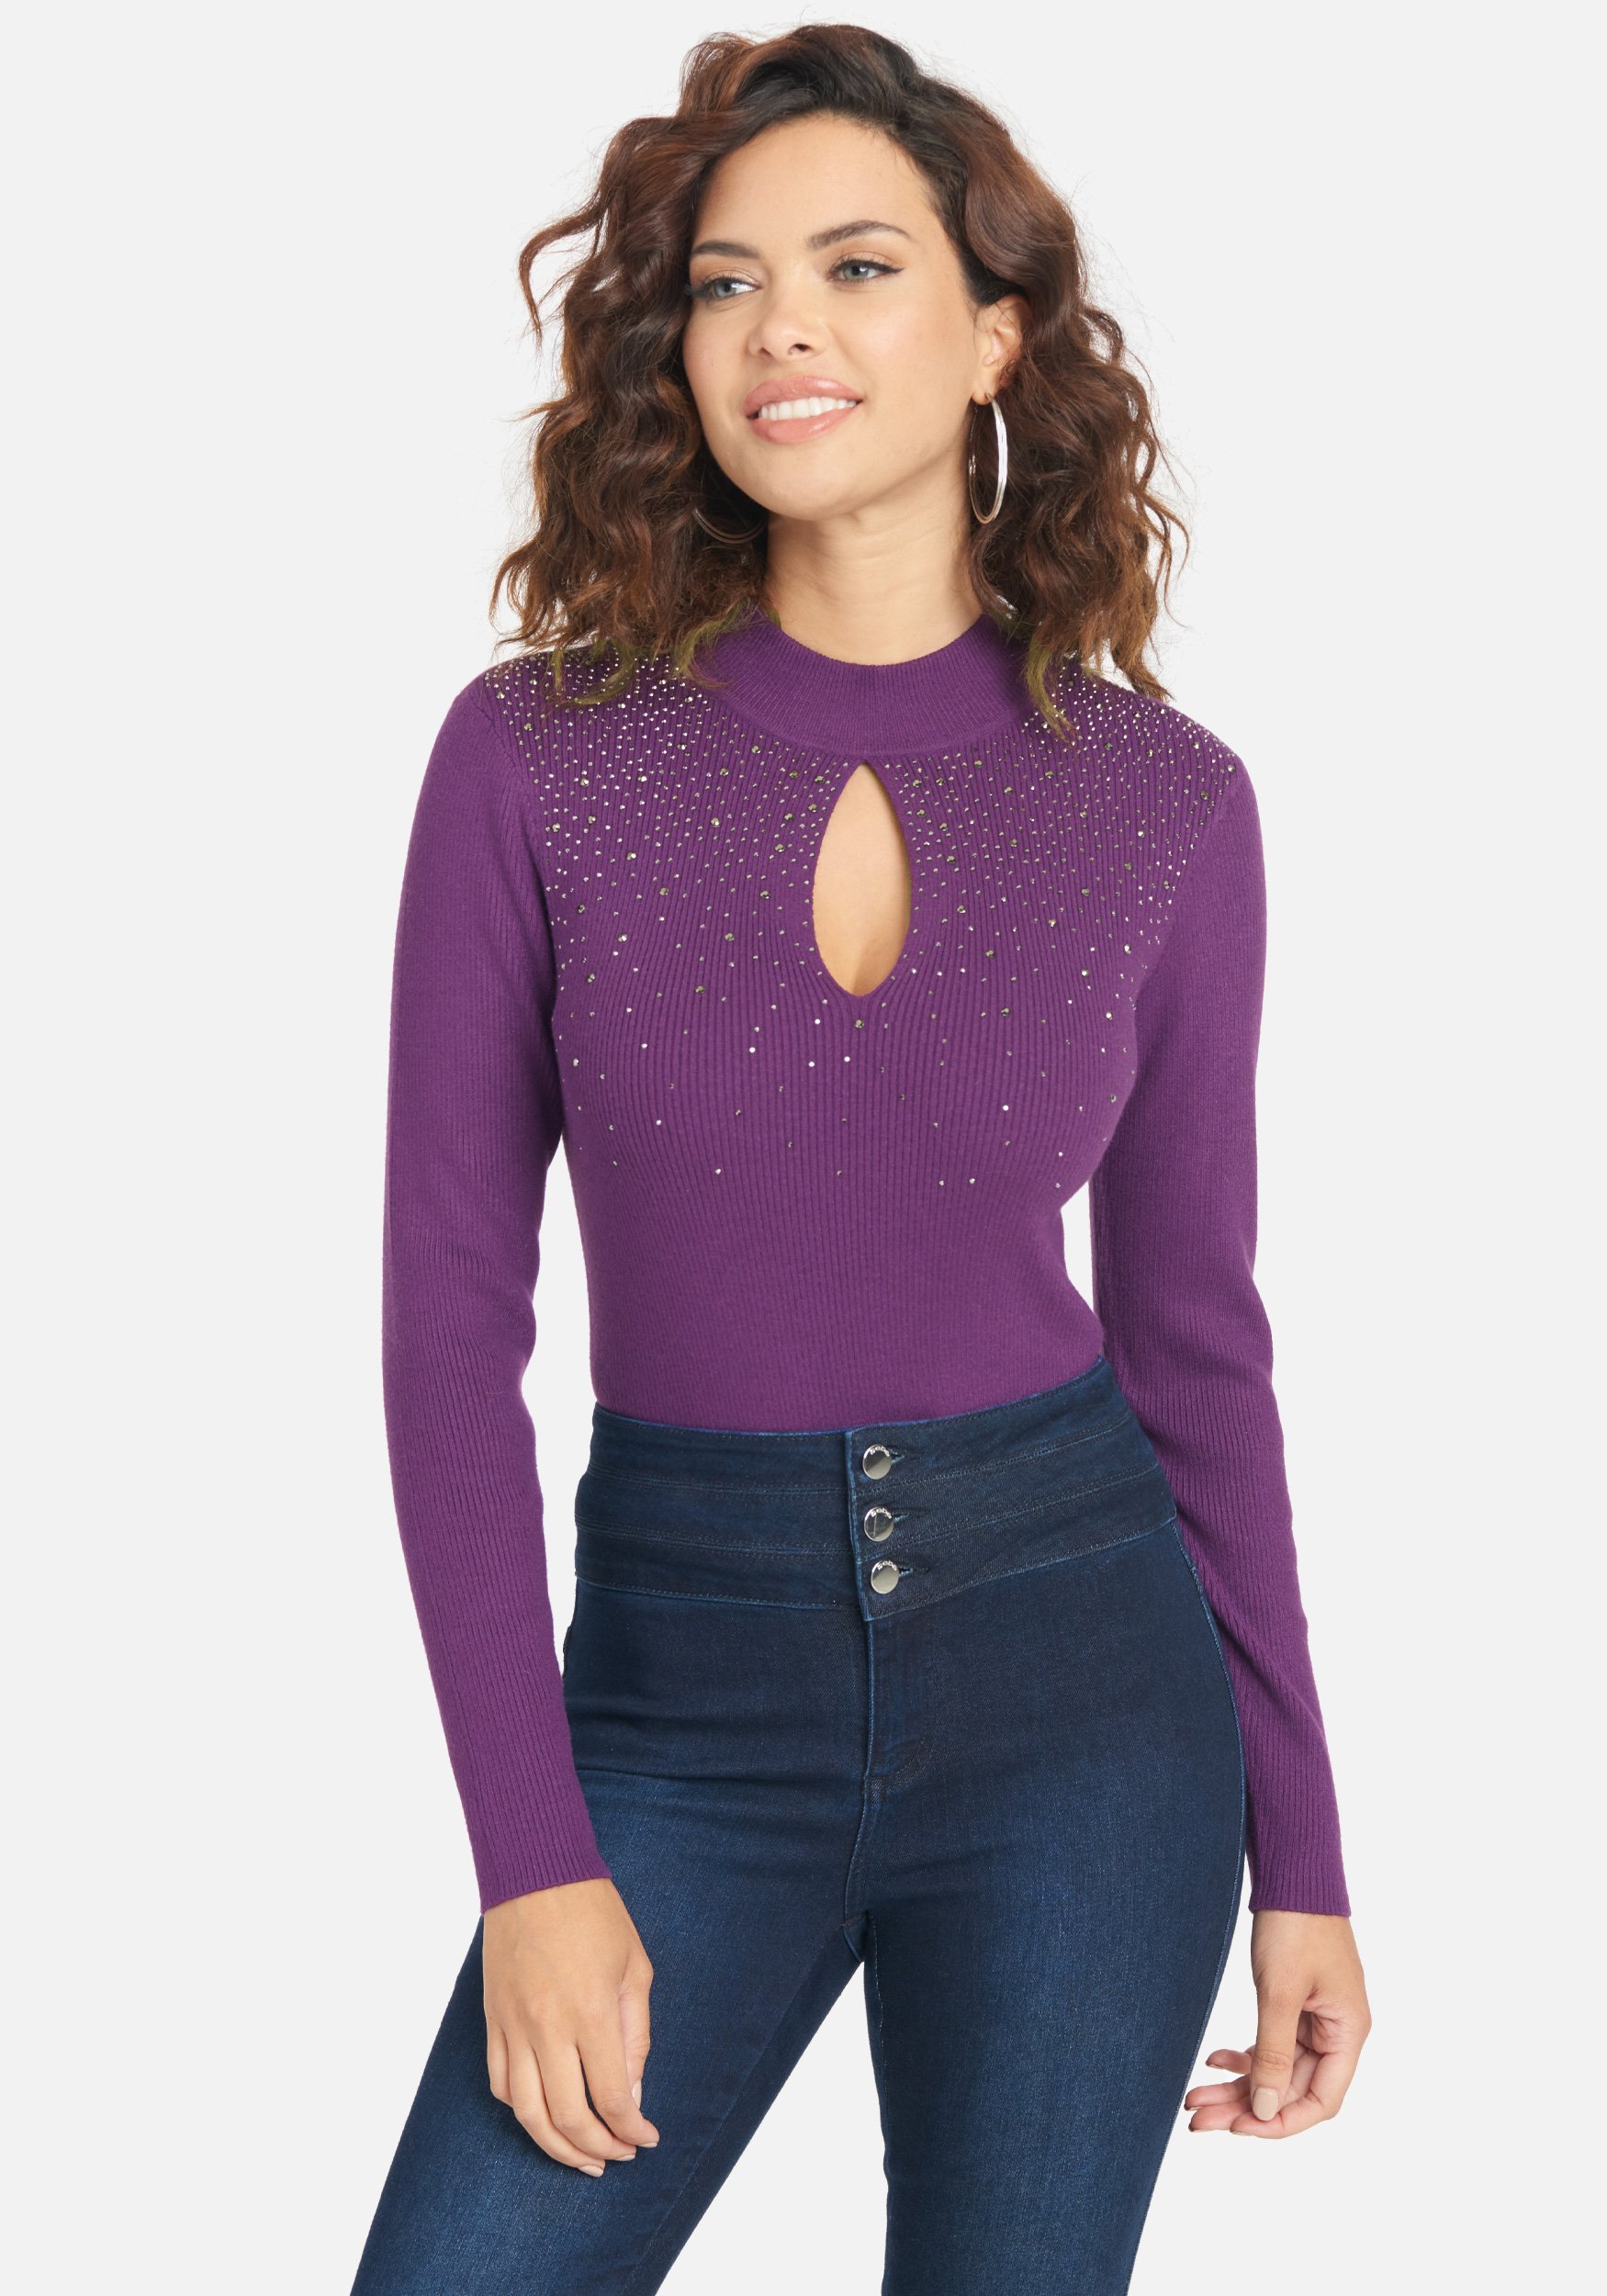 Bebe Women's Cut Out Rhinestone Sweater, Size Large in Imperial Purple Viscose/Nylon